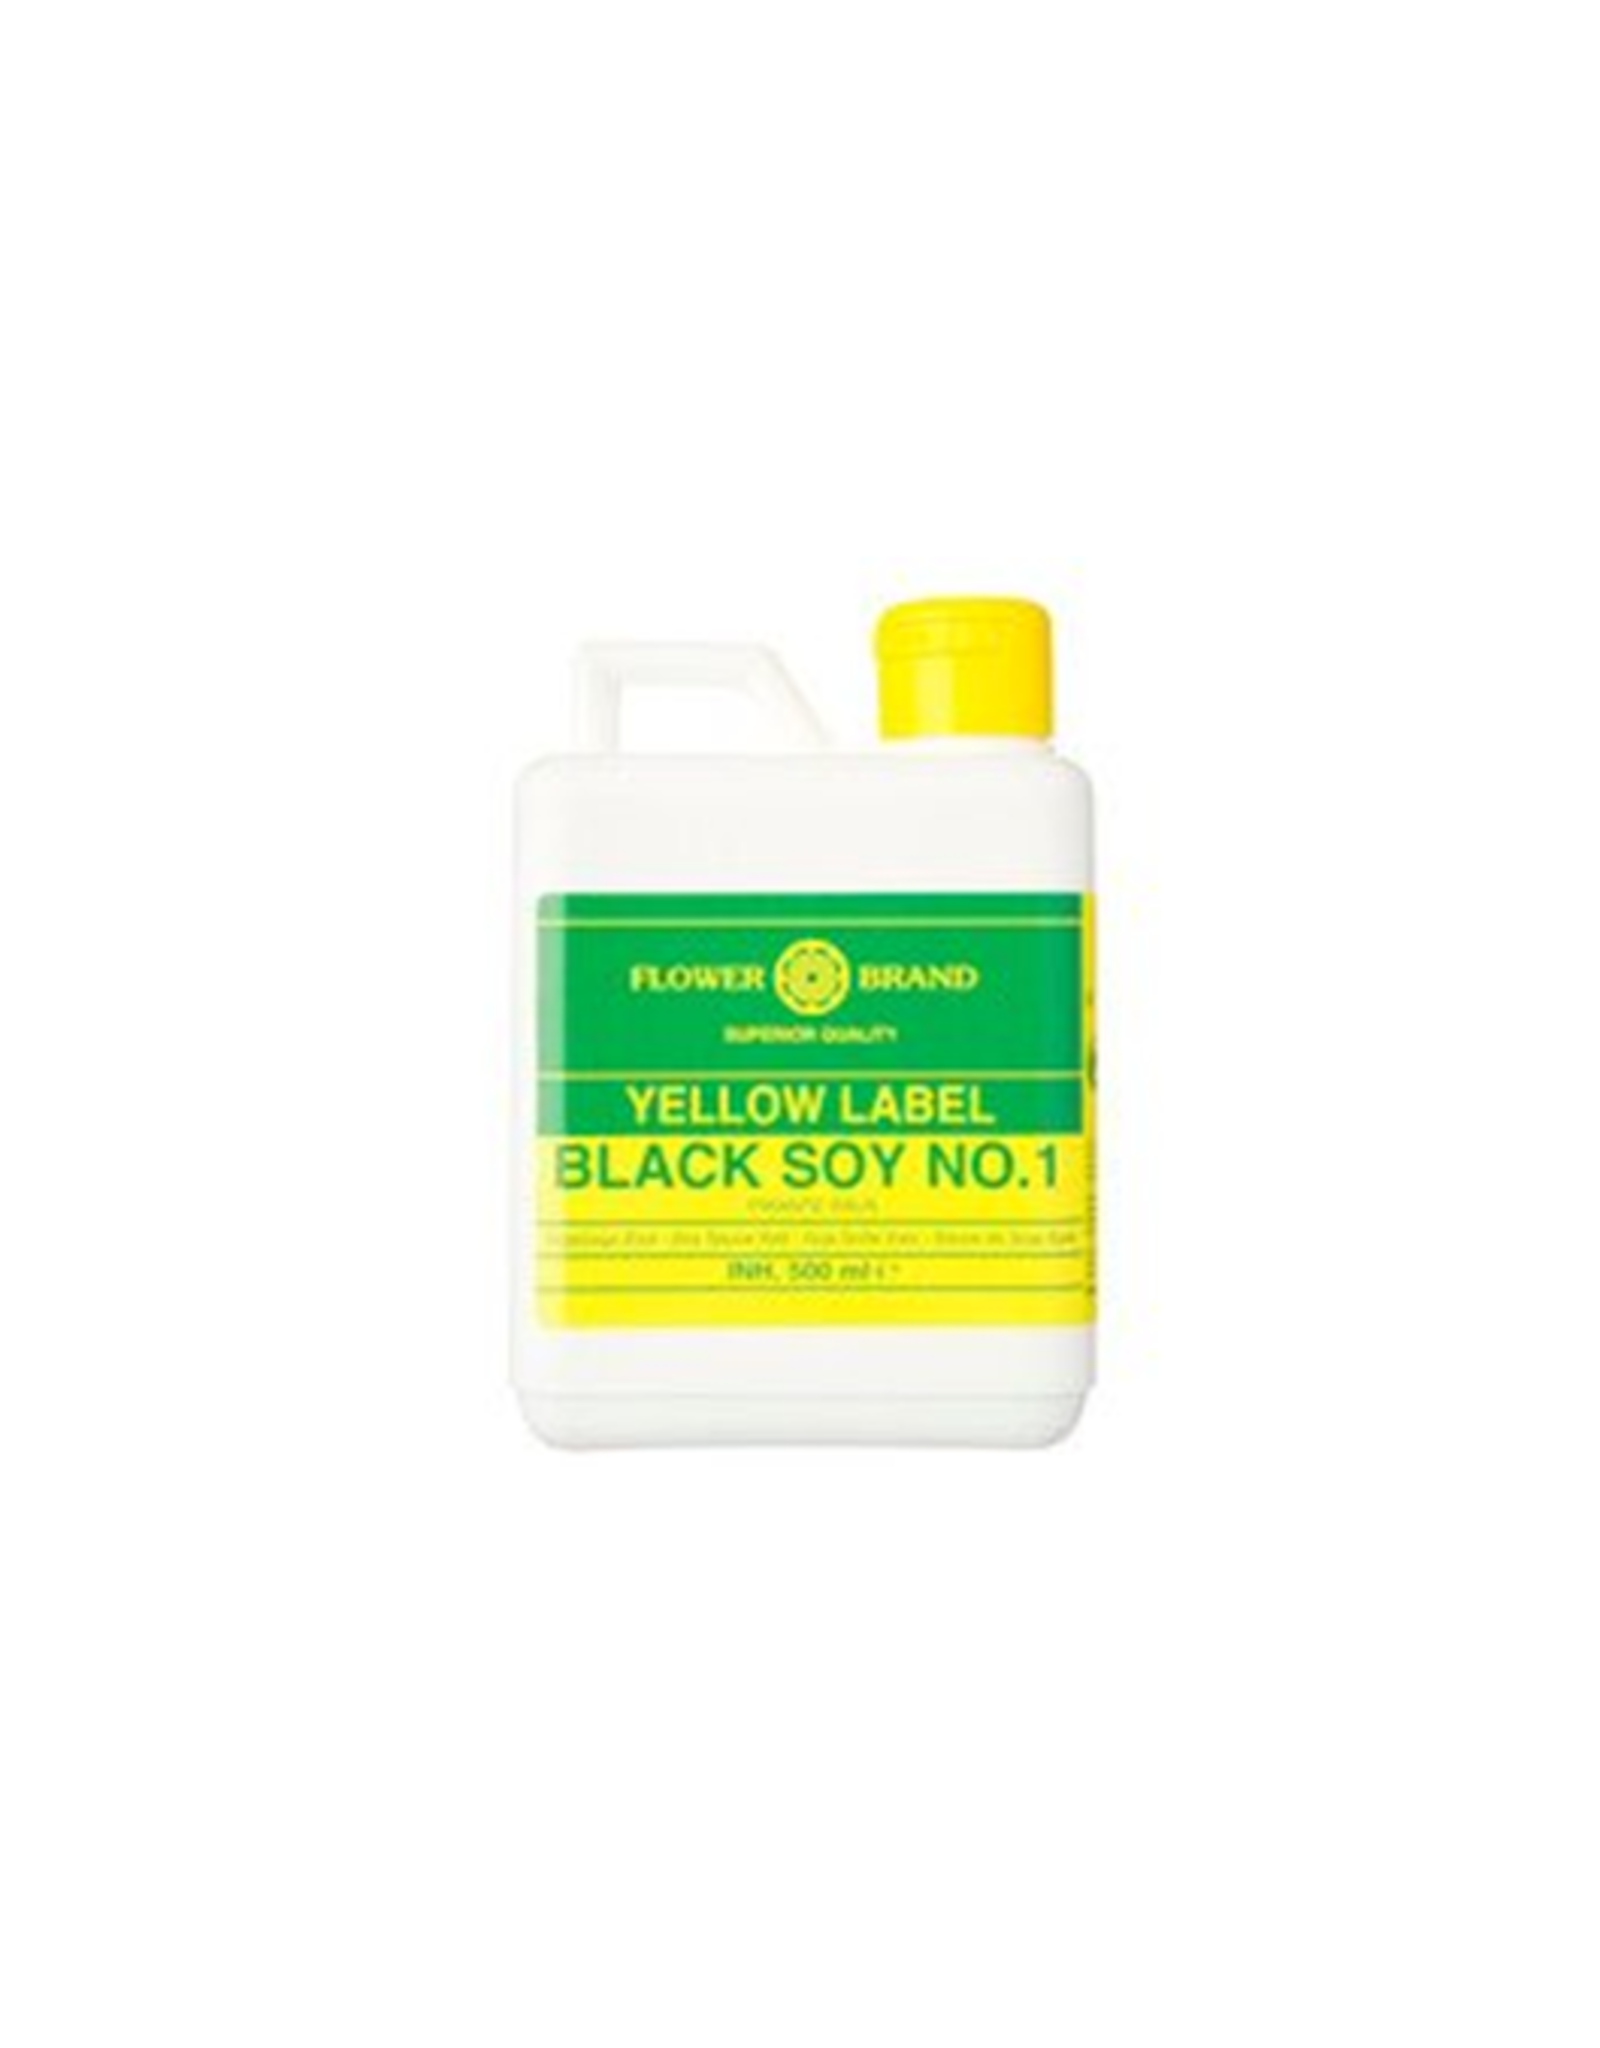 Flower Brand Yellow Label Black Soy No.1 500ml